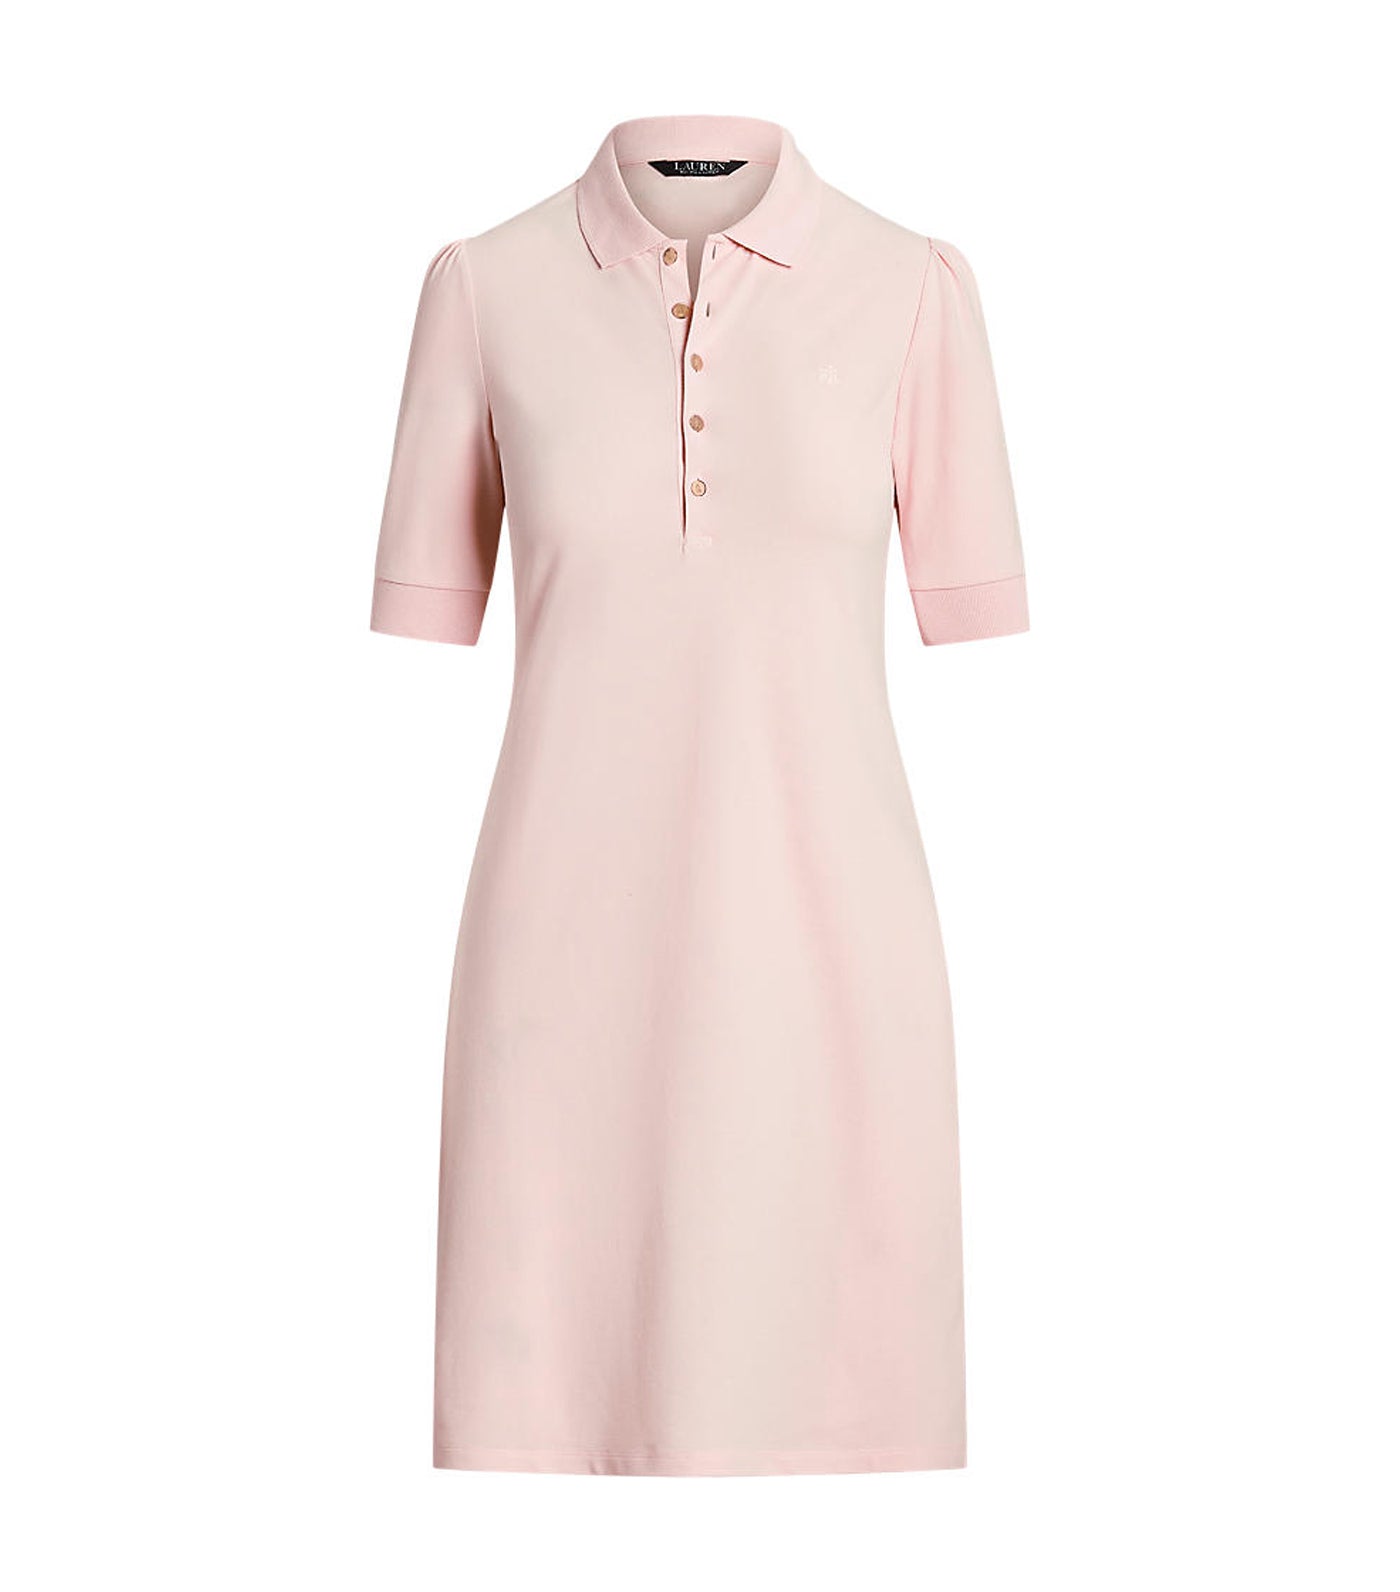 Women's Collared Shift Dress Pale Pink